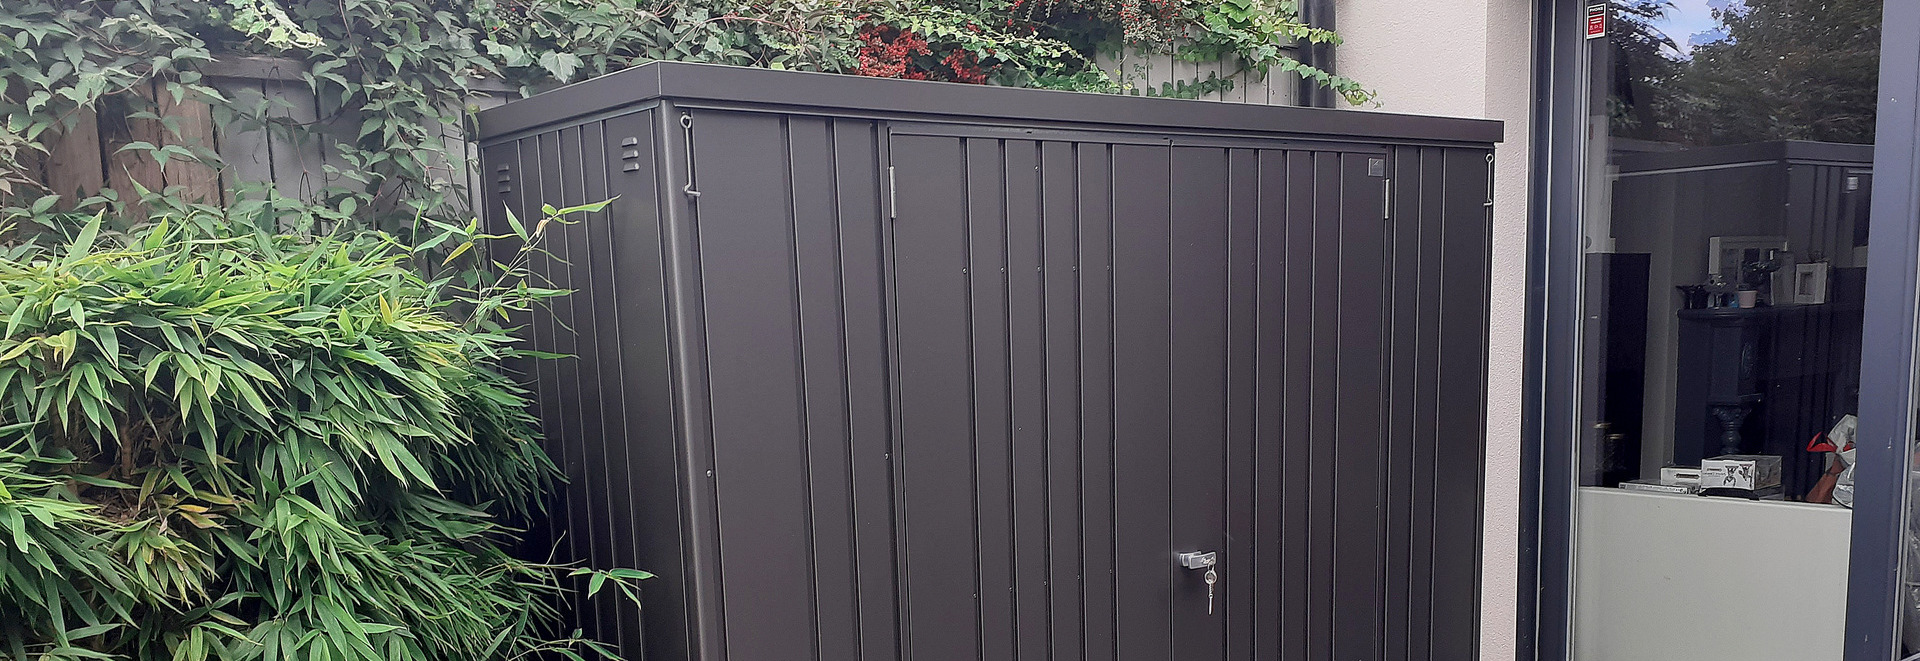 Biohort Equipment Locker 230 in metallic dark grey | Supplied & Fitted by Owen Chubb in Terenure, Dublin 6W  | BEST PRICES & FREE Installation in Dublin | Tel 087-2306 128